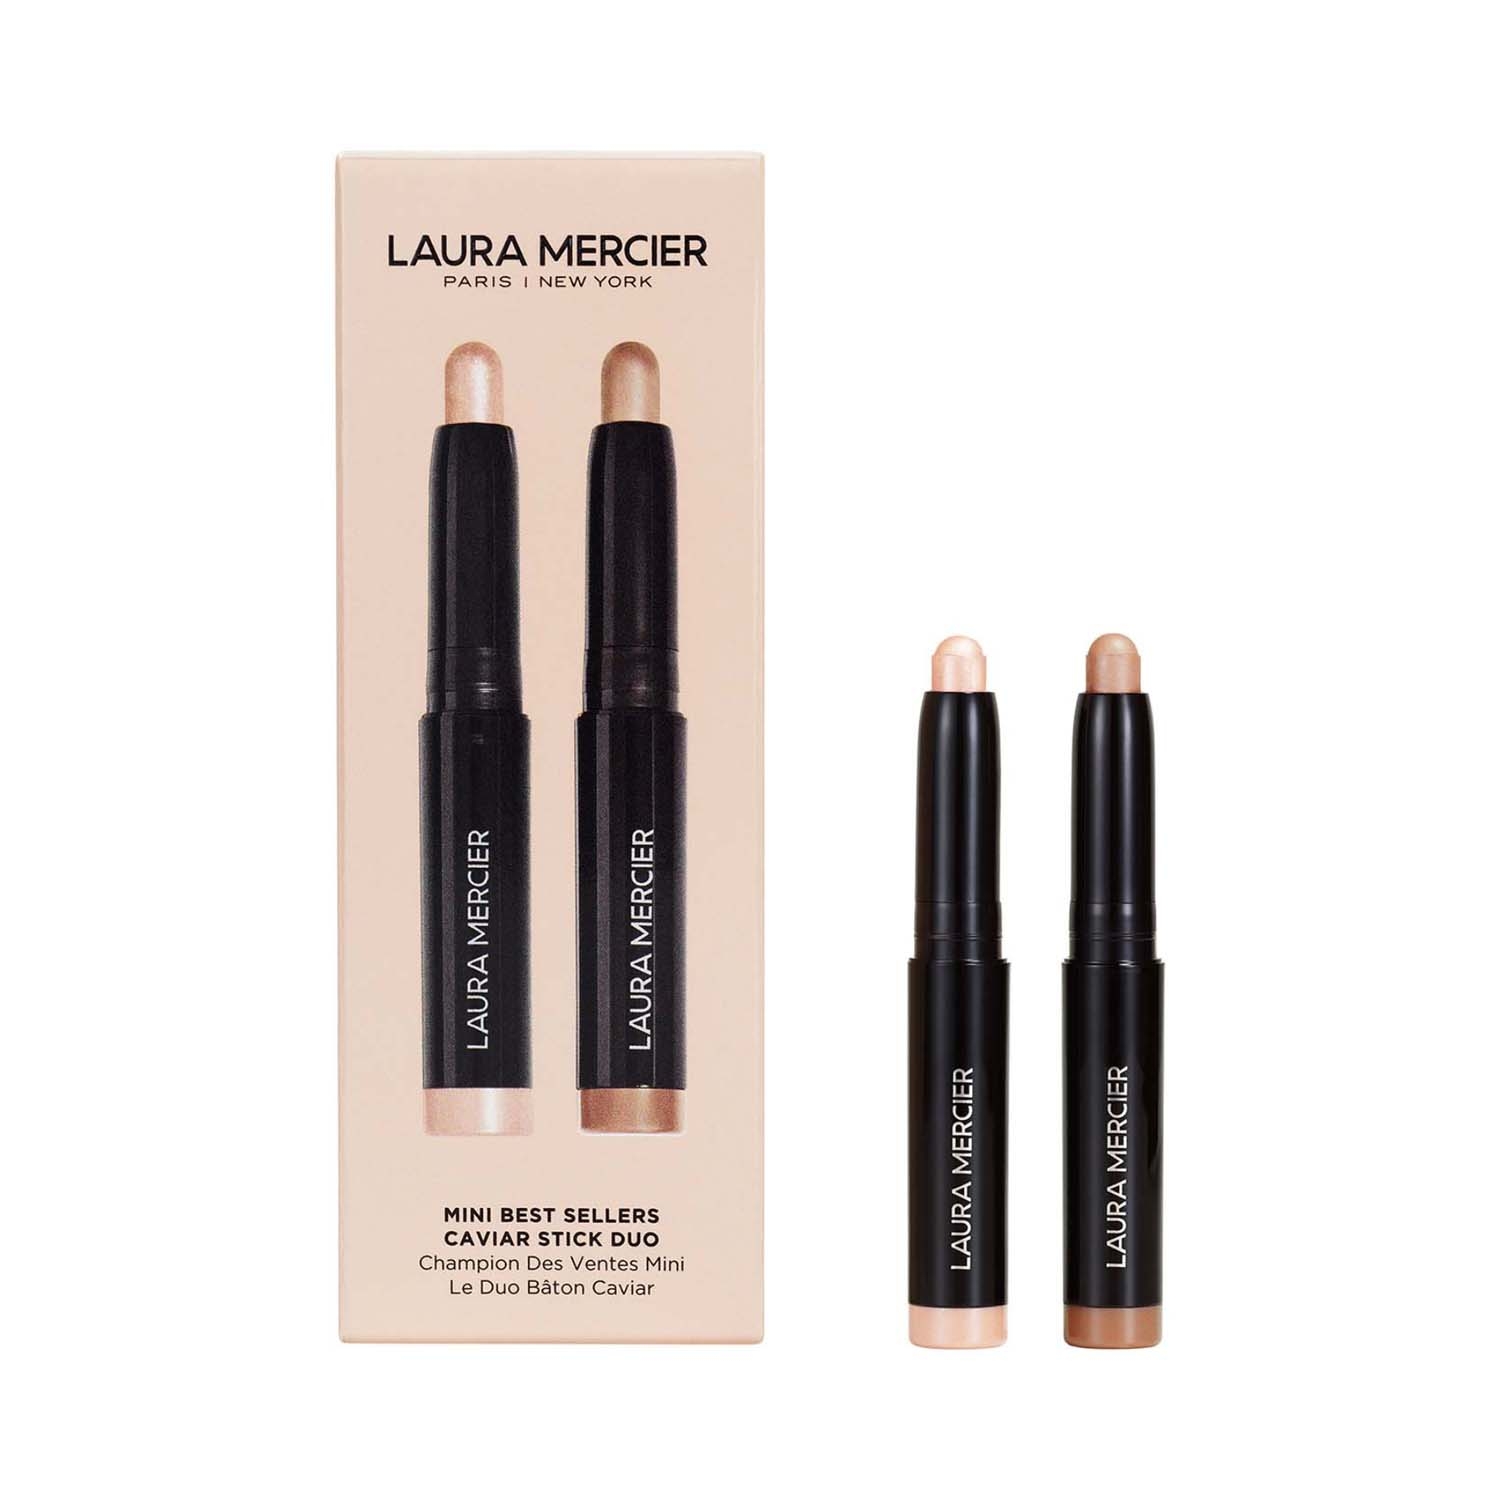 Laura Mercier | Laura Mercier Caviar Stick Eye Shadow Duo Mini Bestsellers - (2Pcs)